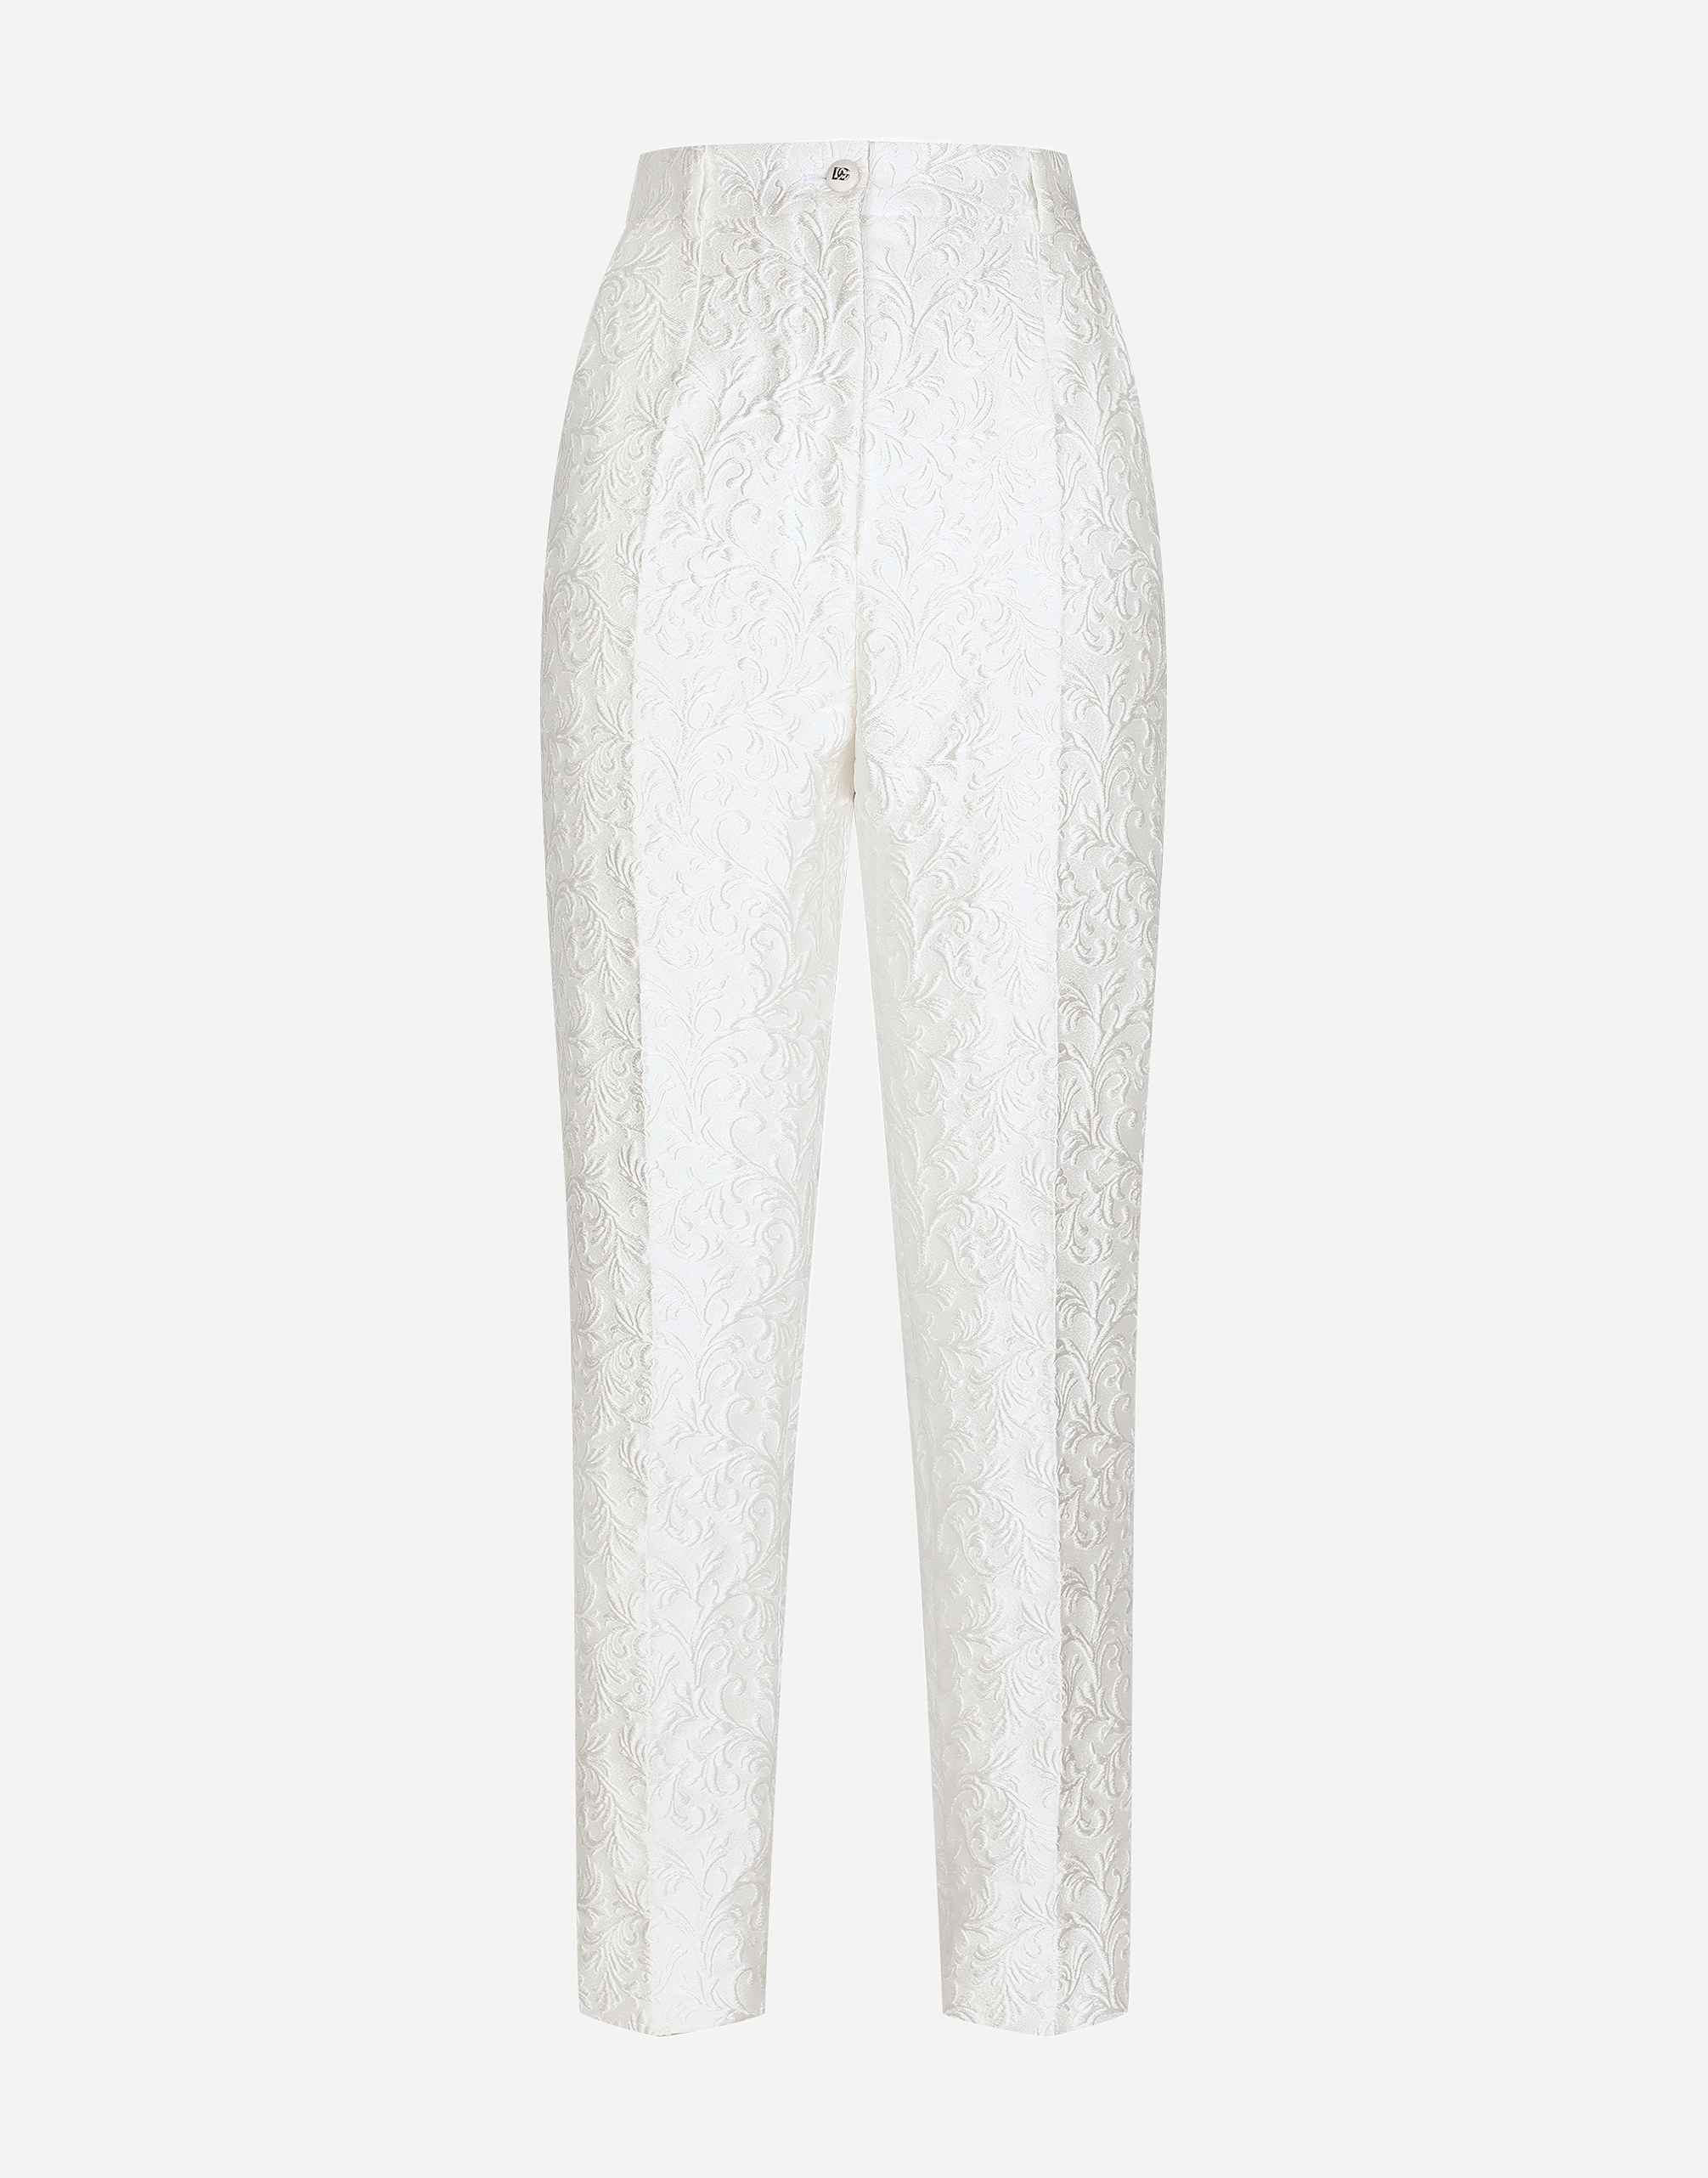 Dolce & Gabbana Brocade Trousers In White